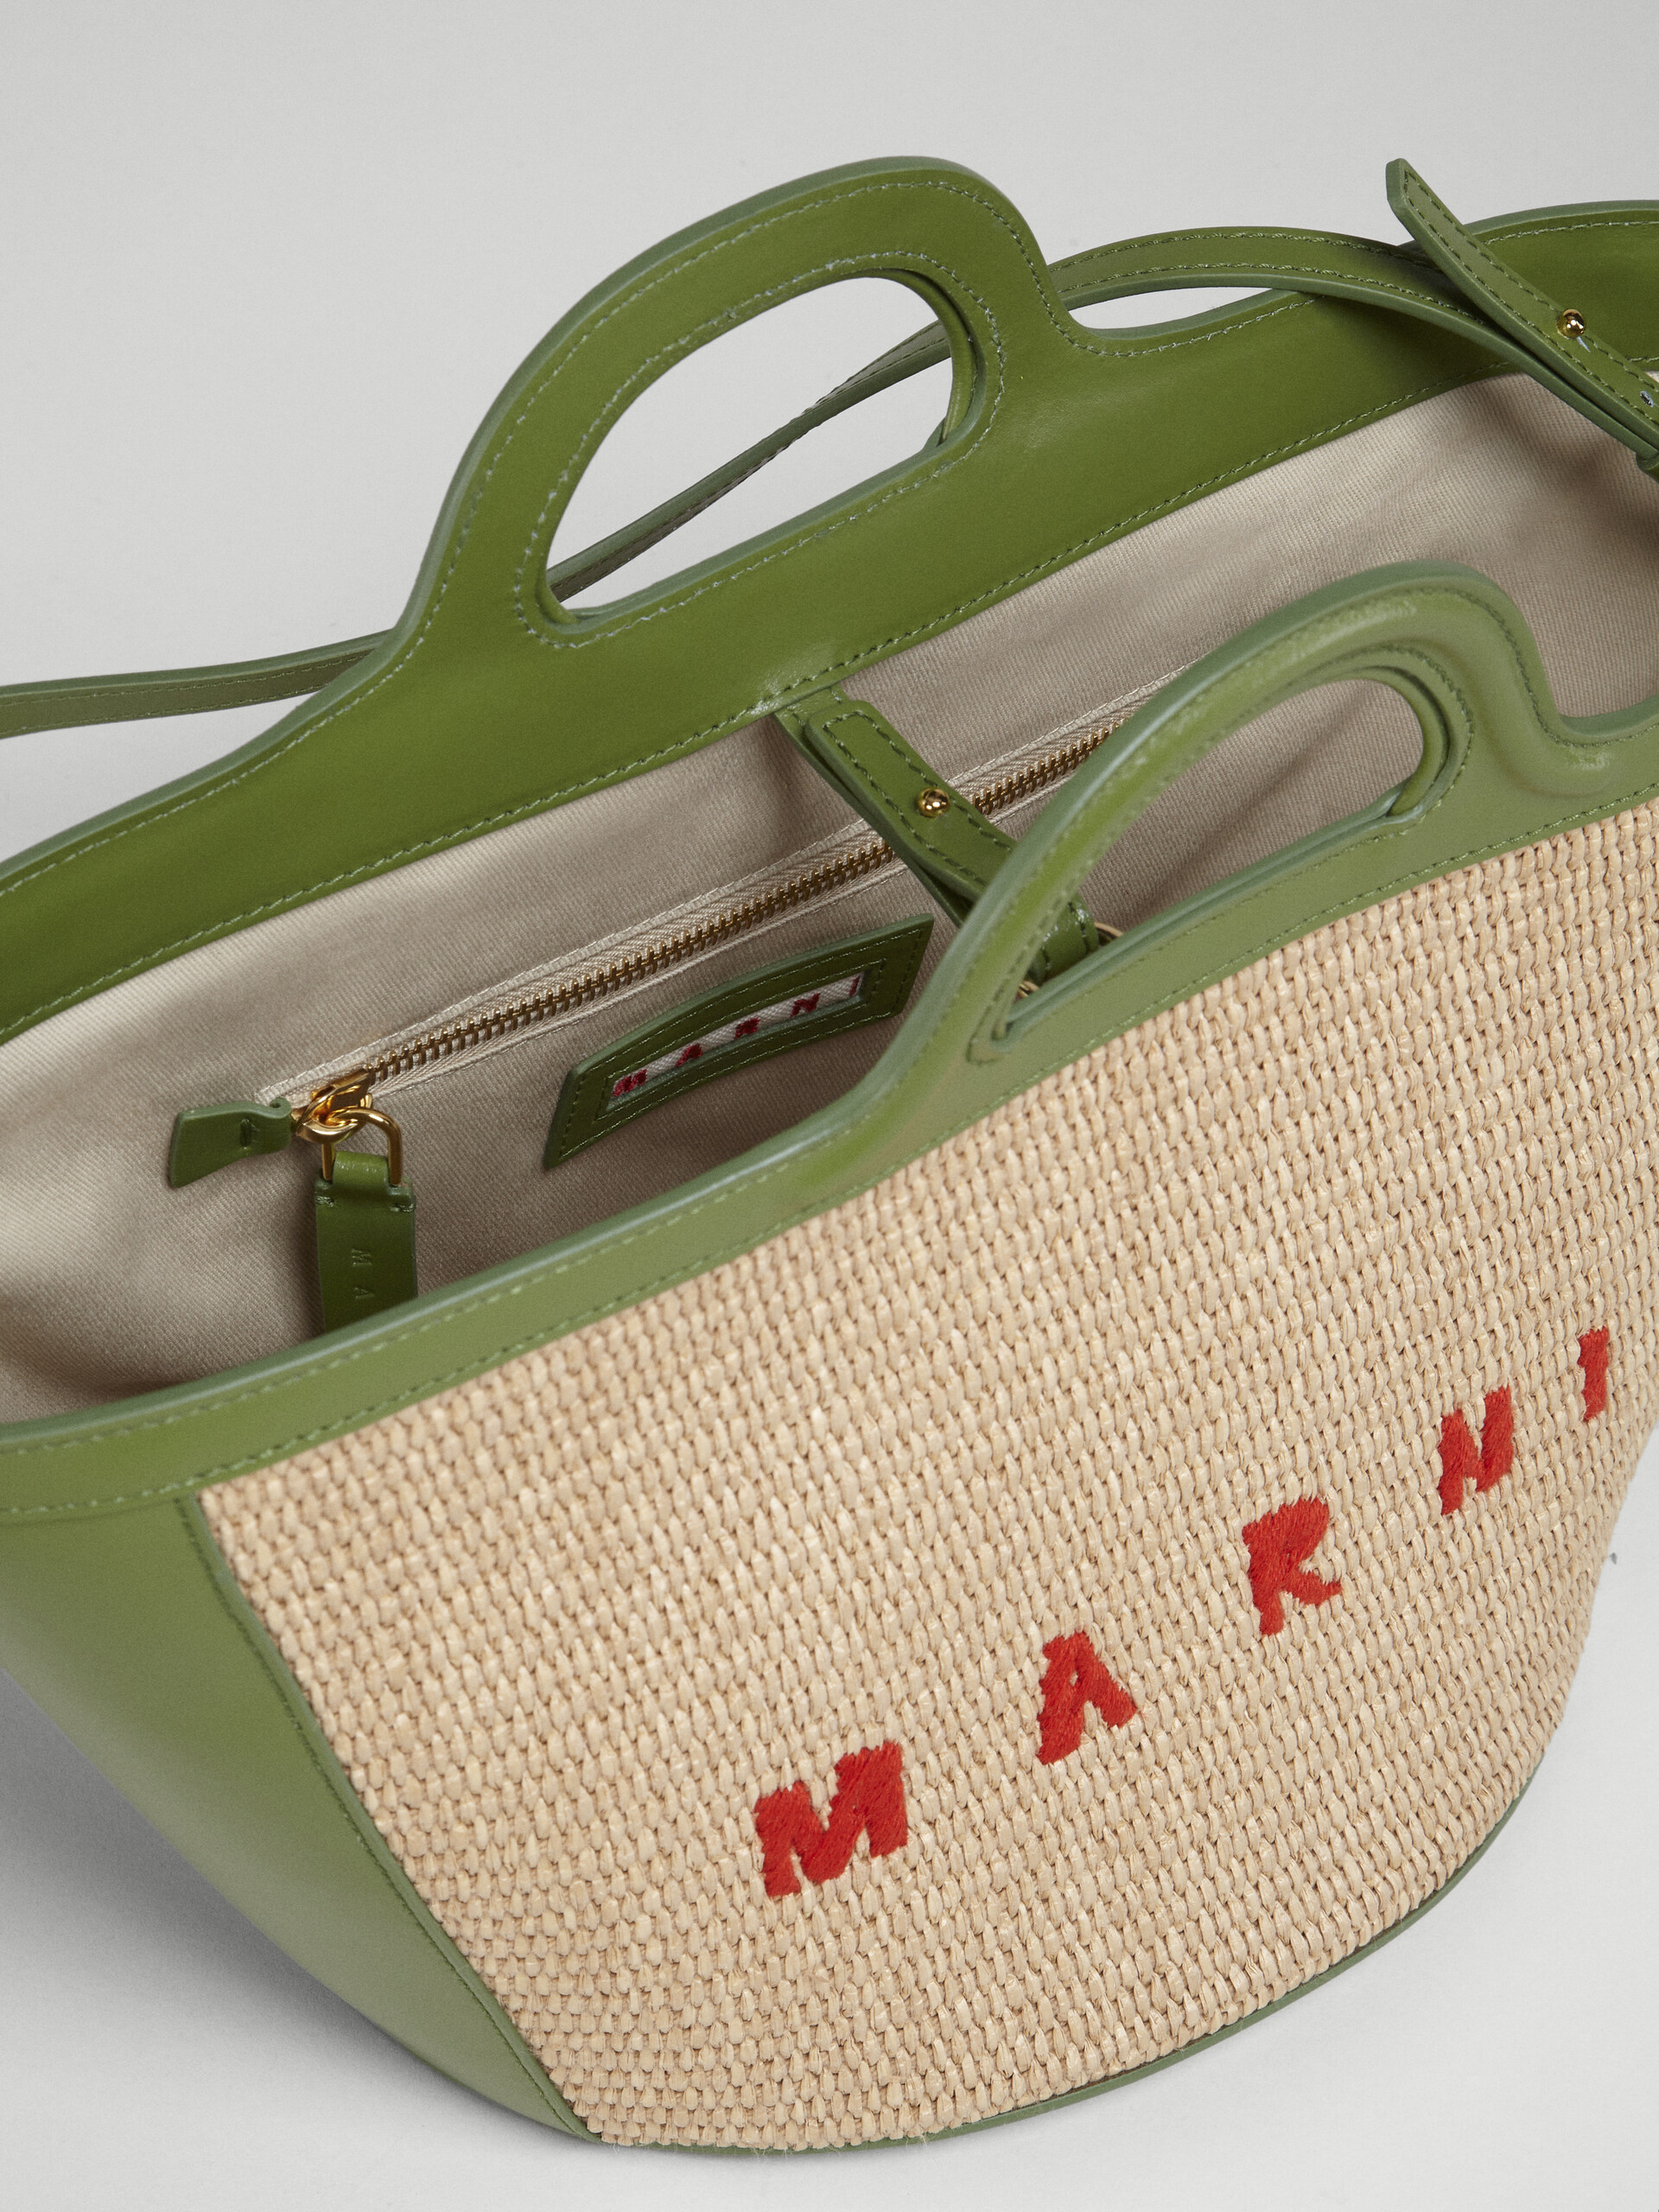 TROPICALIA small bag in green leather and raffia - Handbags - Image 4